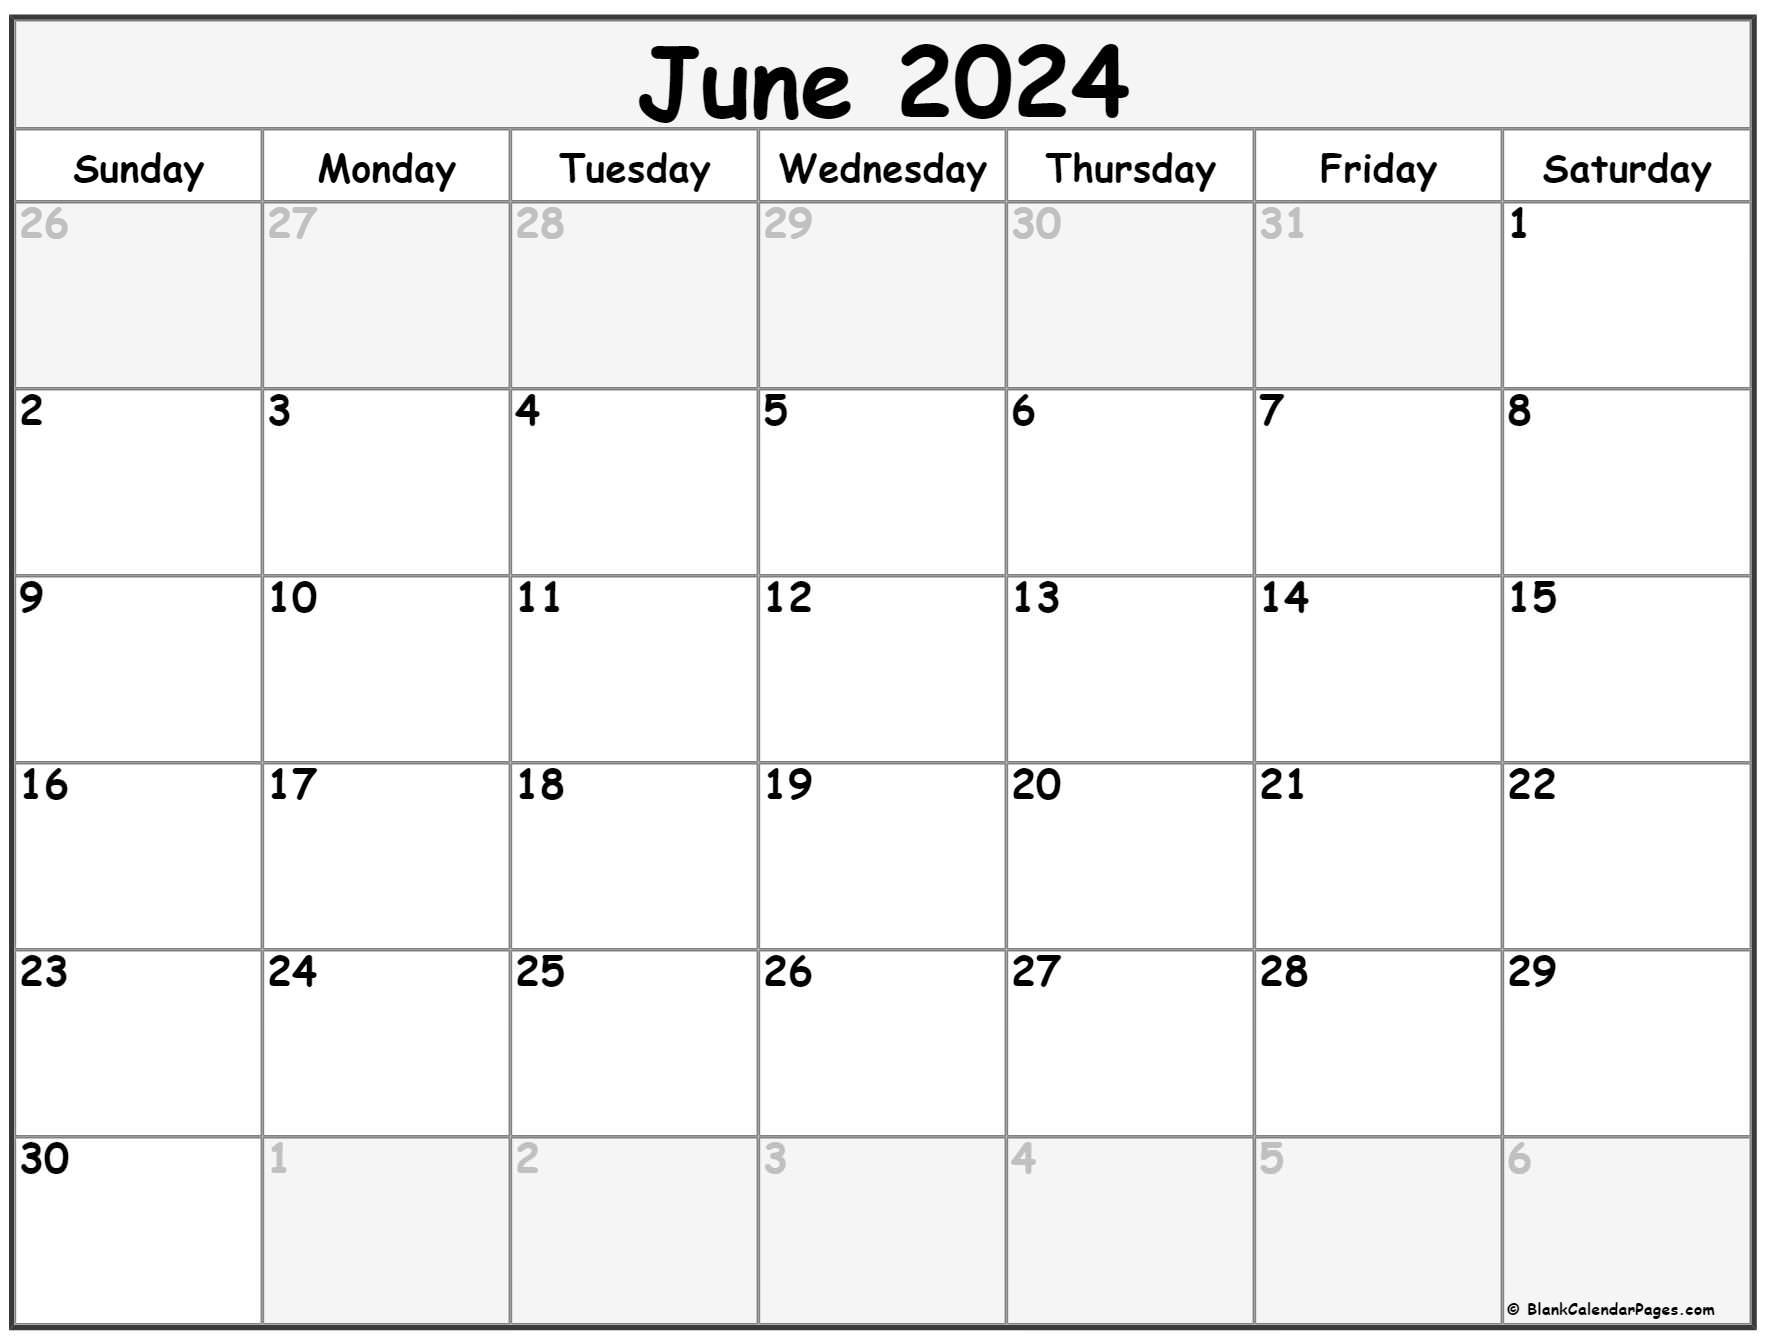 June 2024 Calendar | Free Printable Calendar for Free Printable Calendar For June 2024